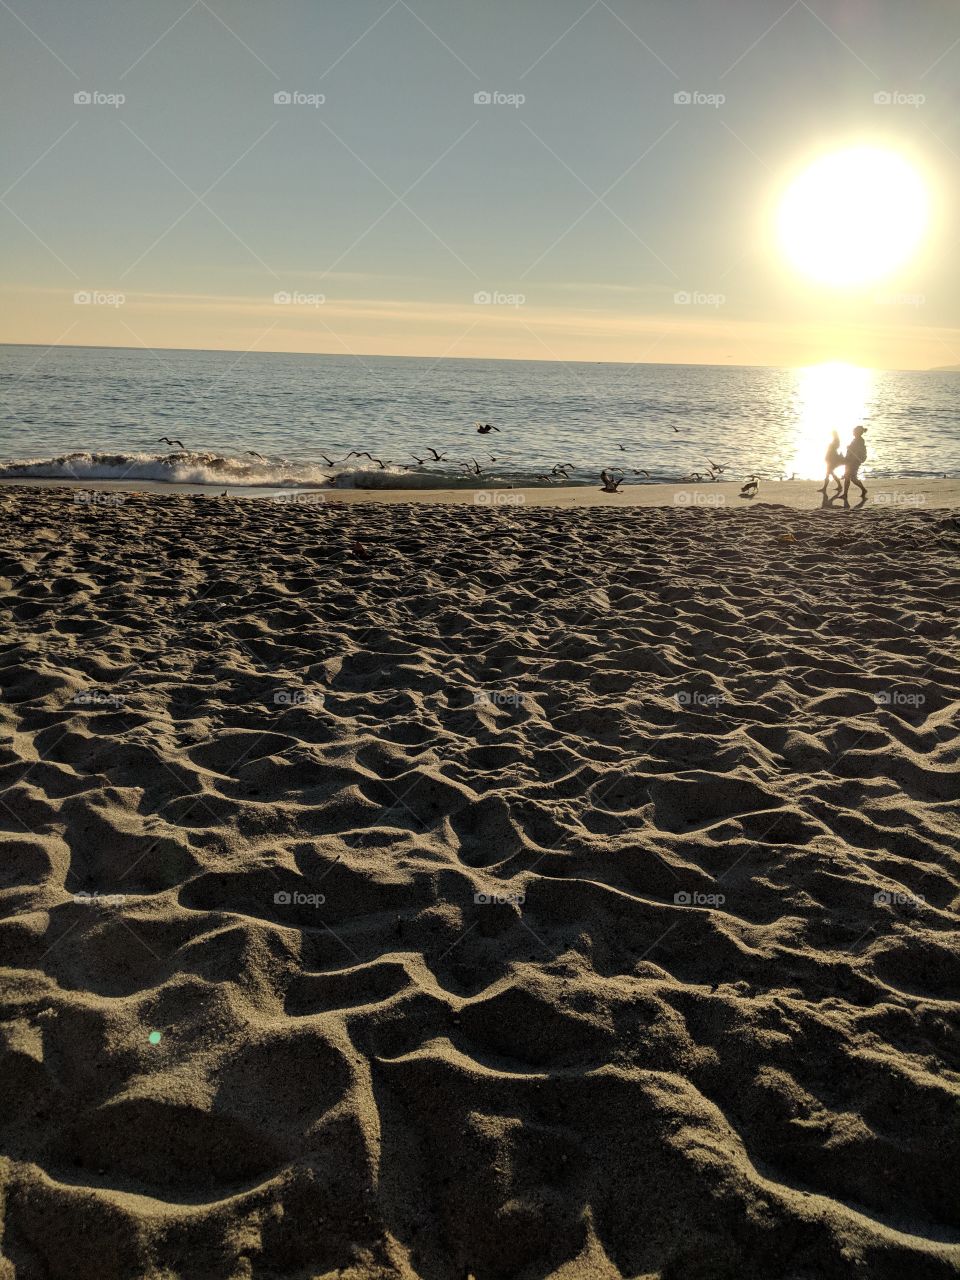 Laguna Beach, California at sunset